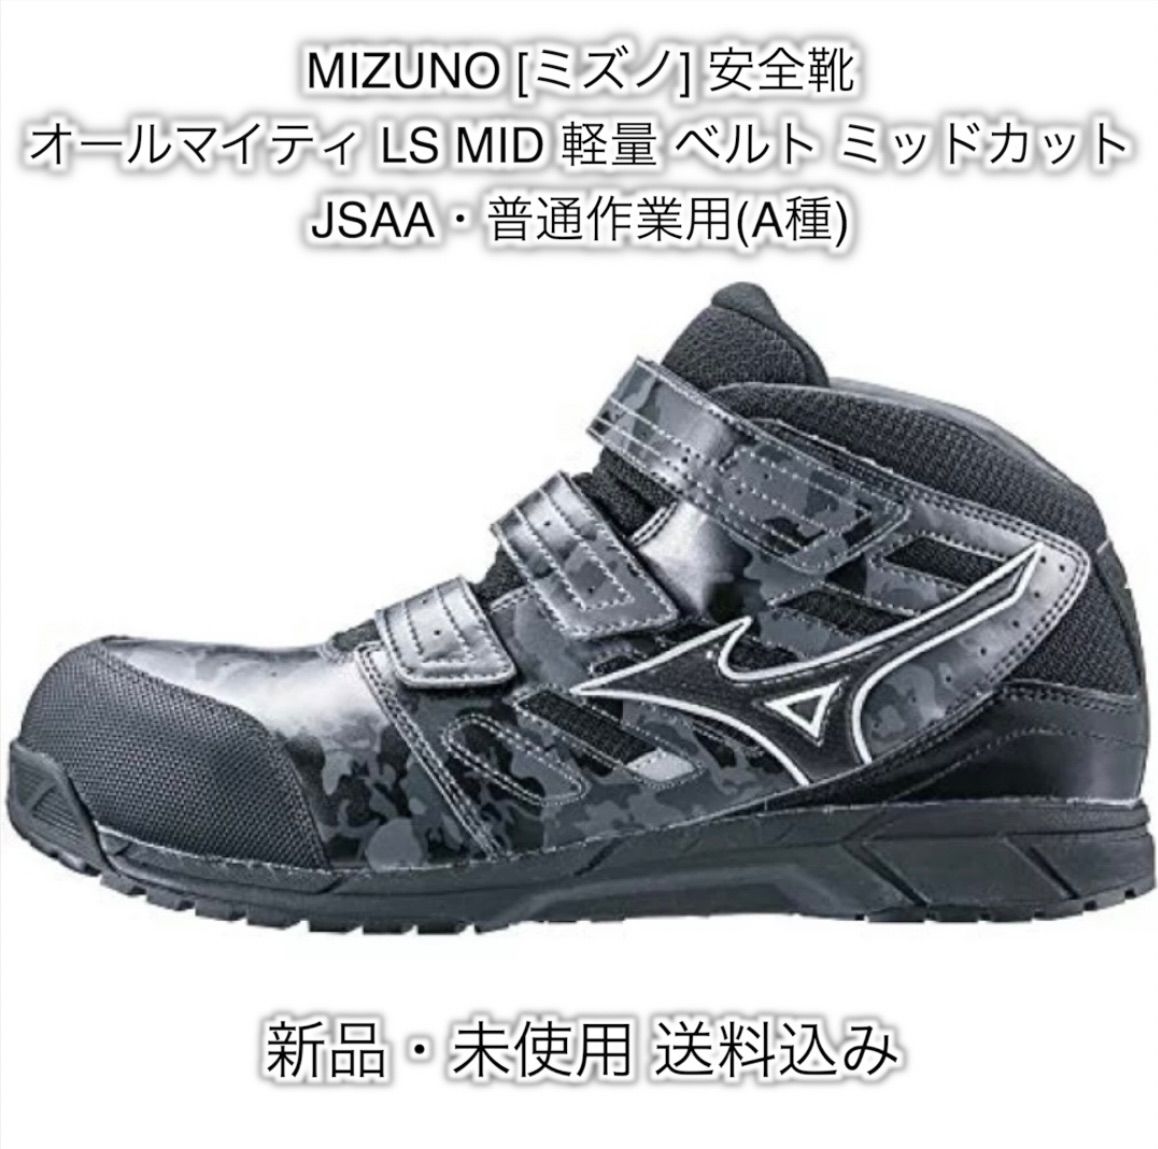 MIZUNO[ミズノ] 安全靴 オールマイティ 26cm - メルカリ